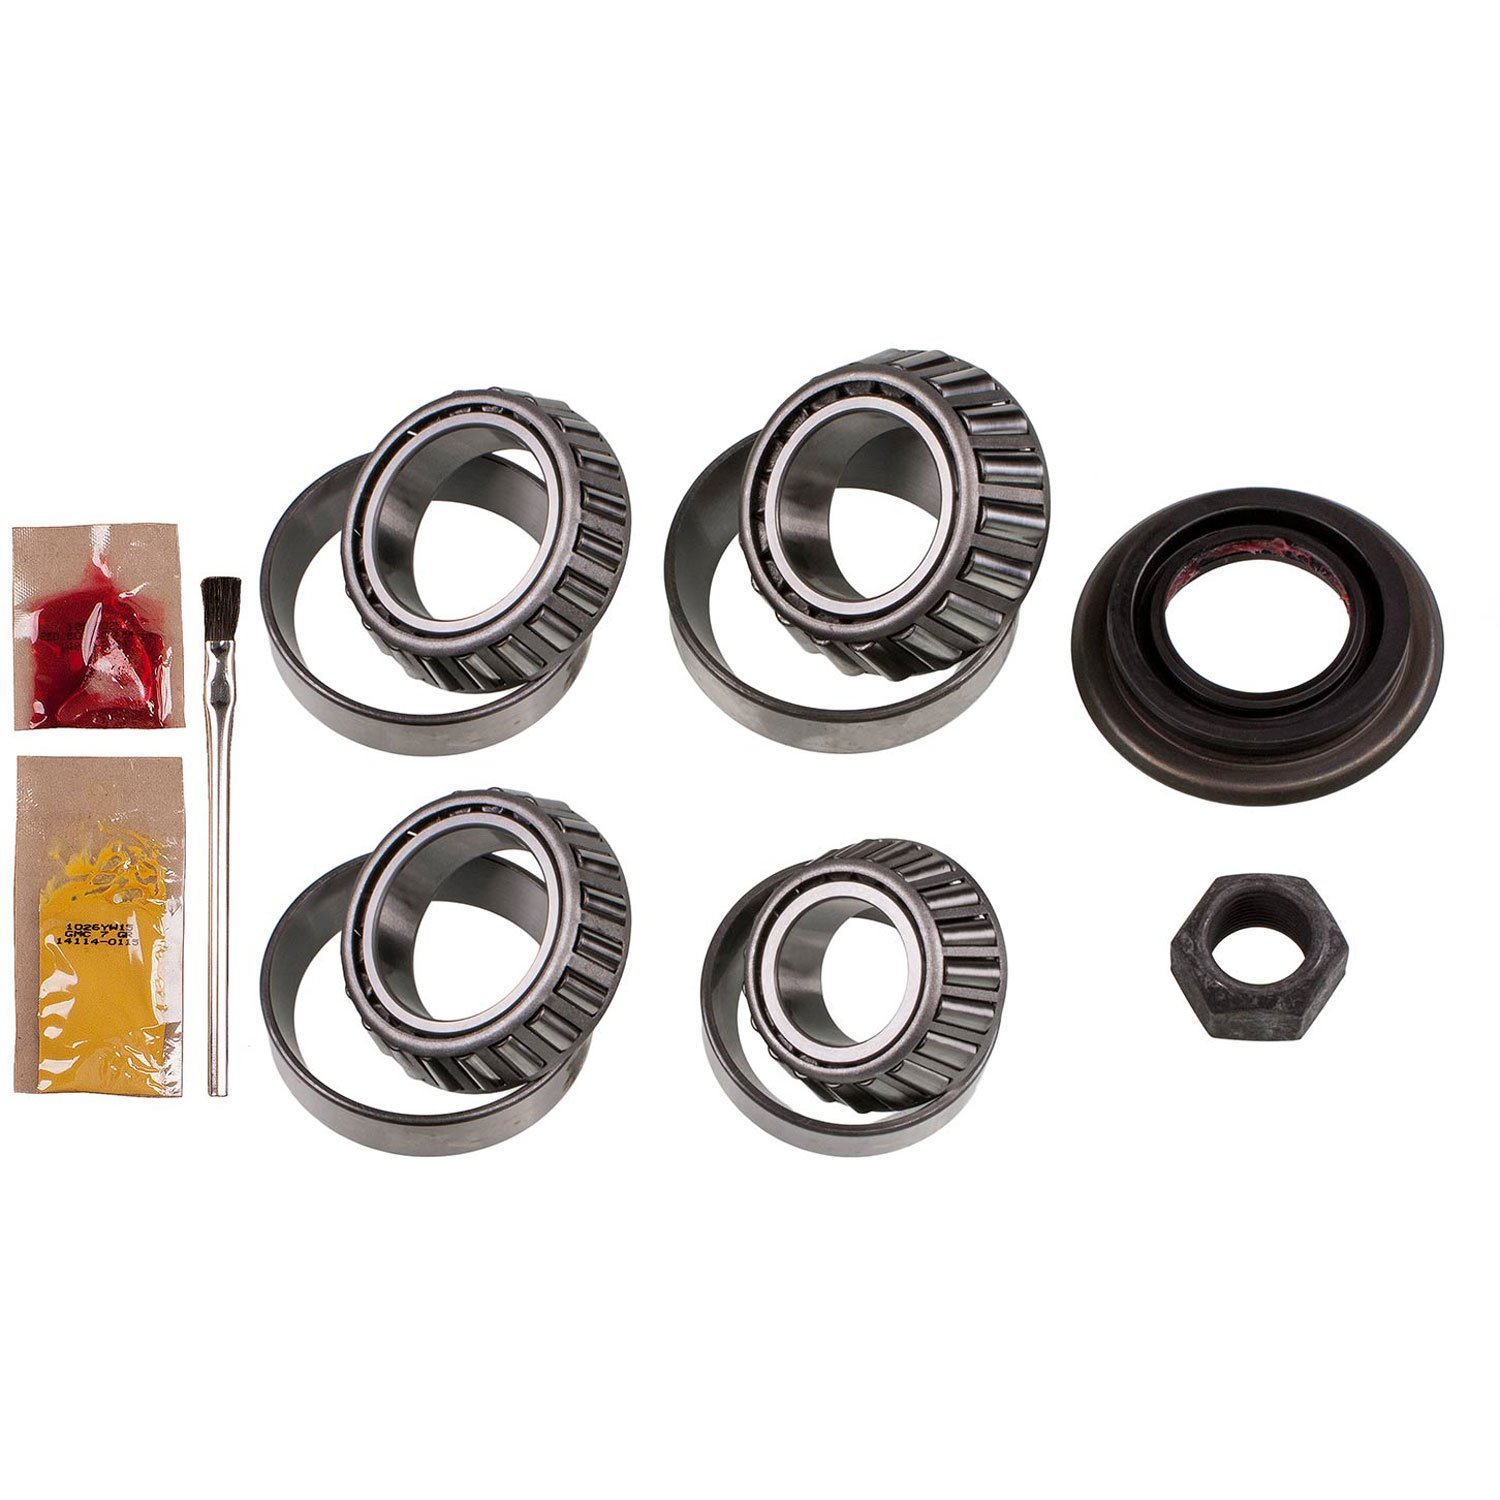 Differential Bearing Kit GM 8 in. 10-bolt - Timken Bearings